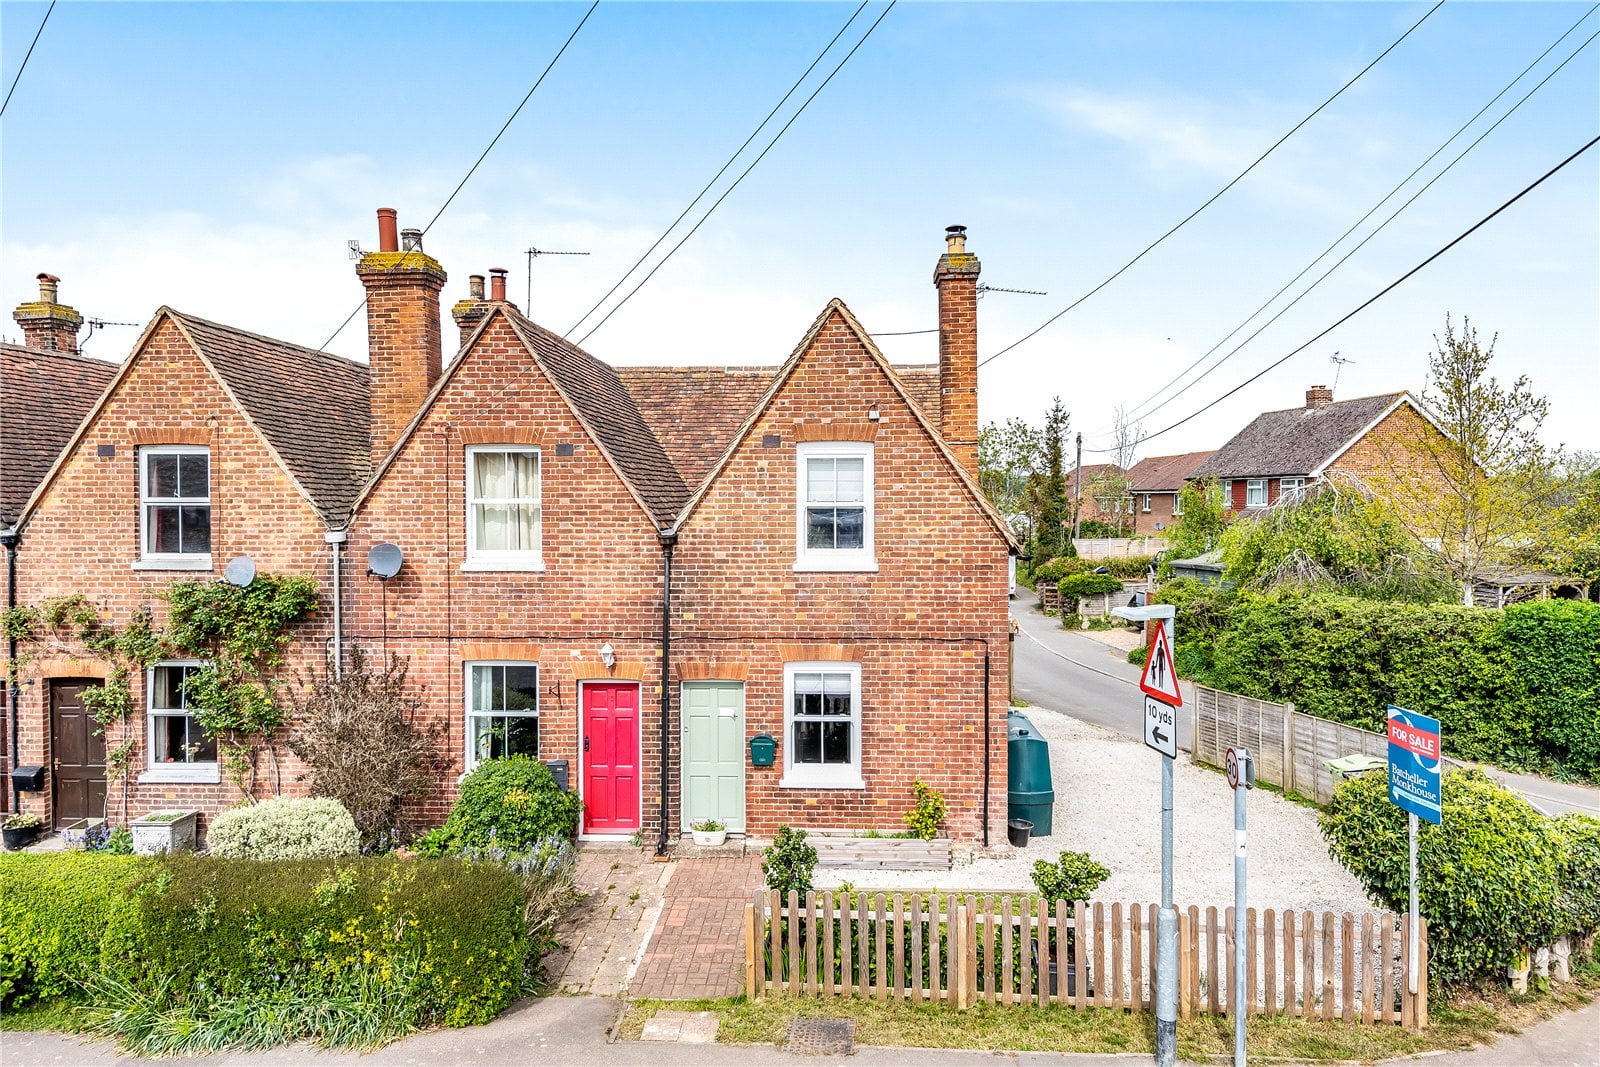 Maidstone Road, Horsmonden, , Kent | residential-sales